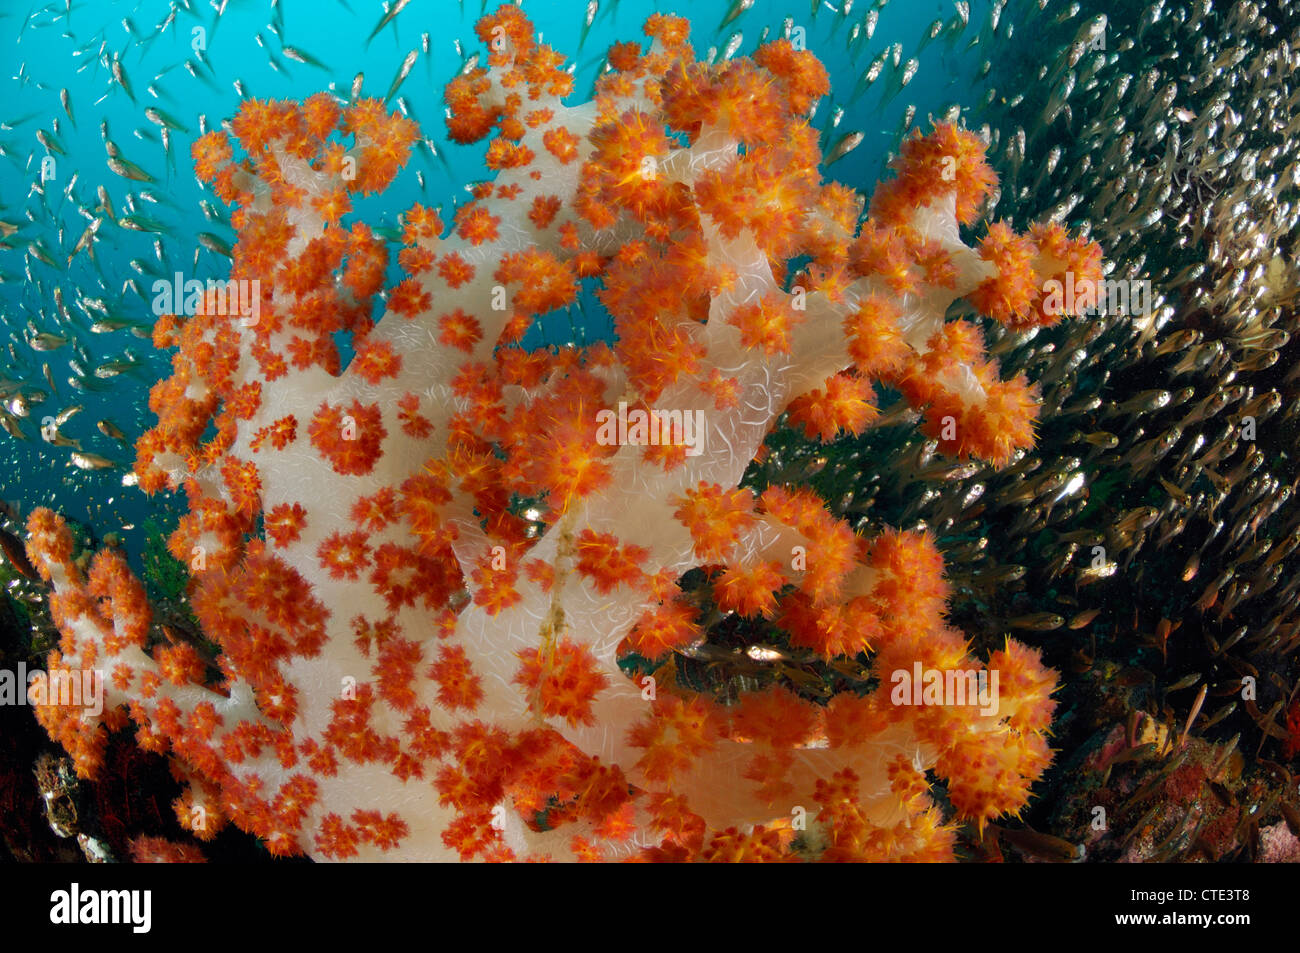 Orange Soft Coral, Dendronephthya sp., Cannibal Rock, Rinca, Indonesia Stock Photo